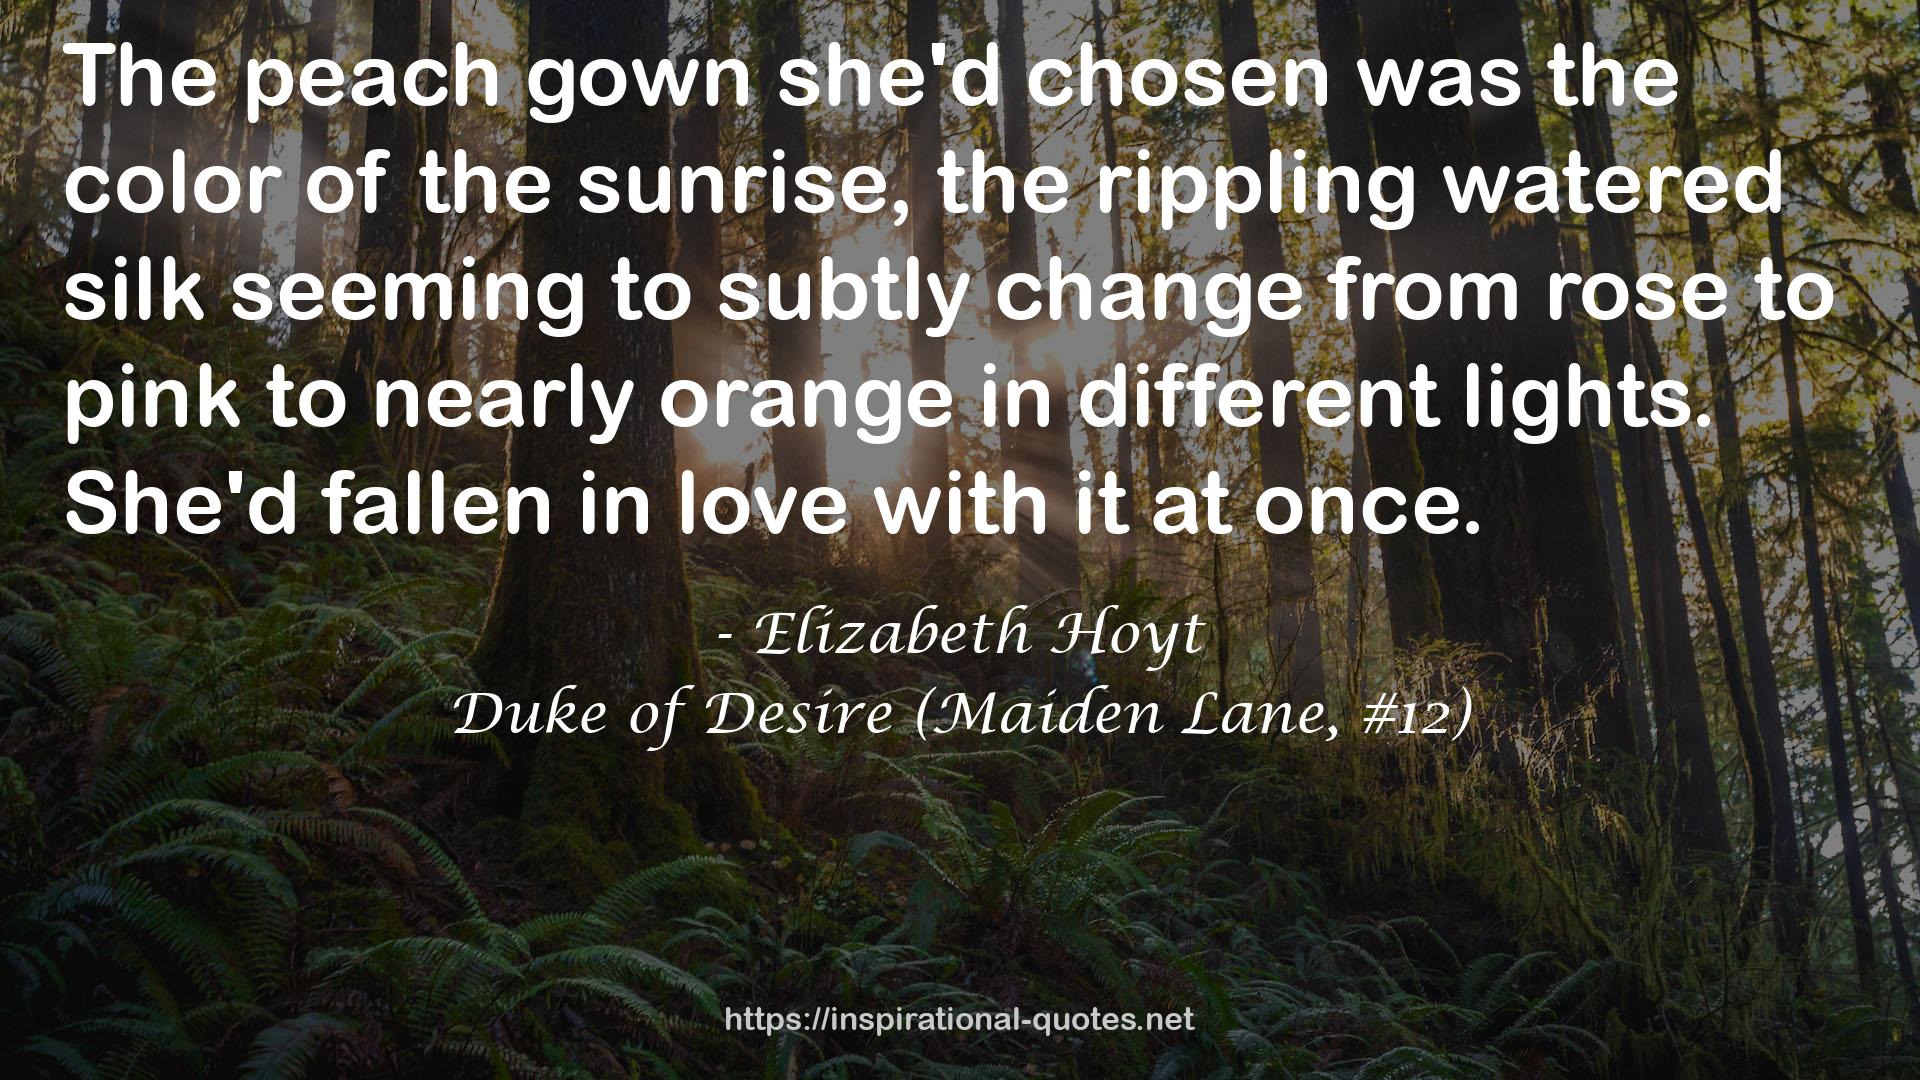 Duke of Desire (Maiden Lane, #12) QUOTES